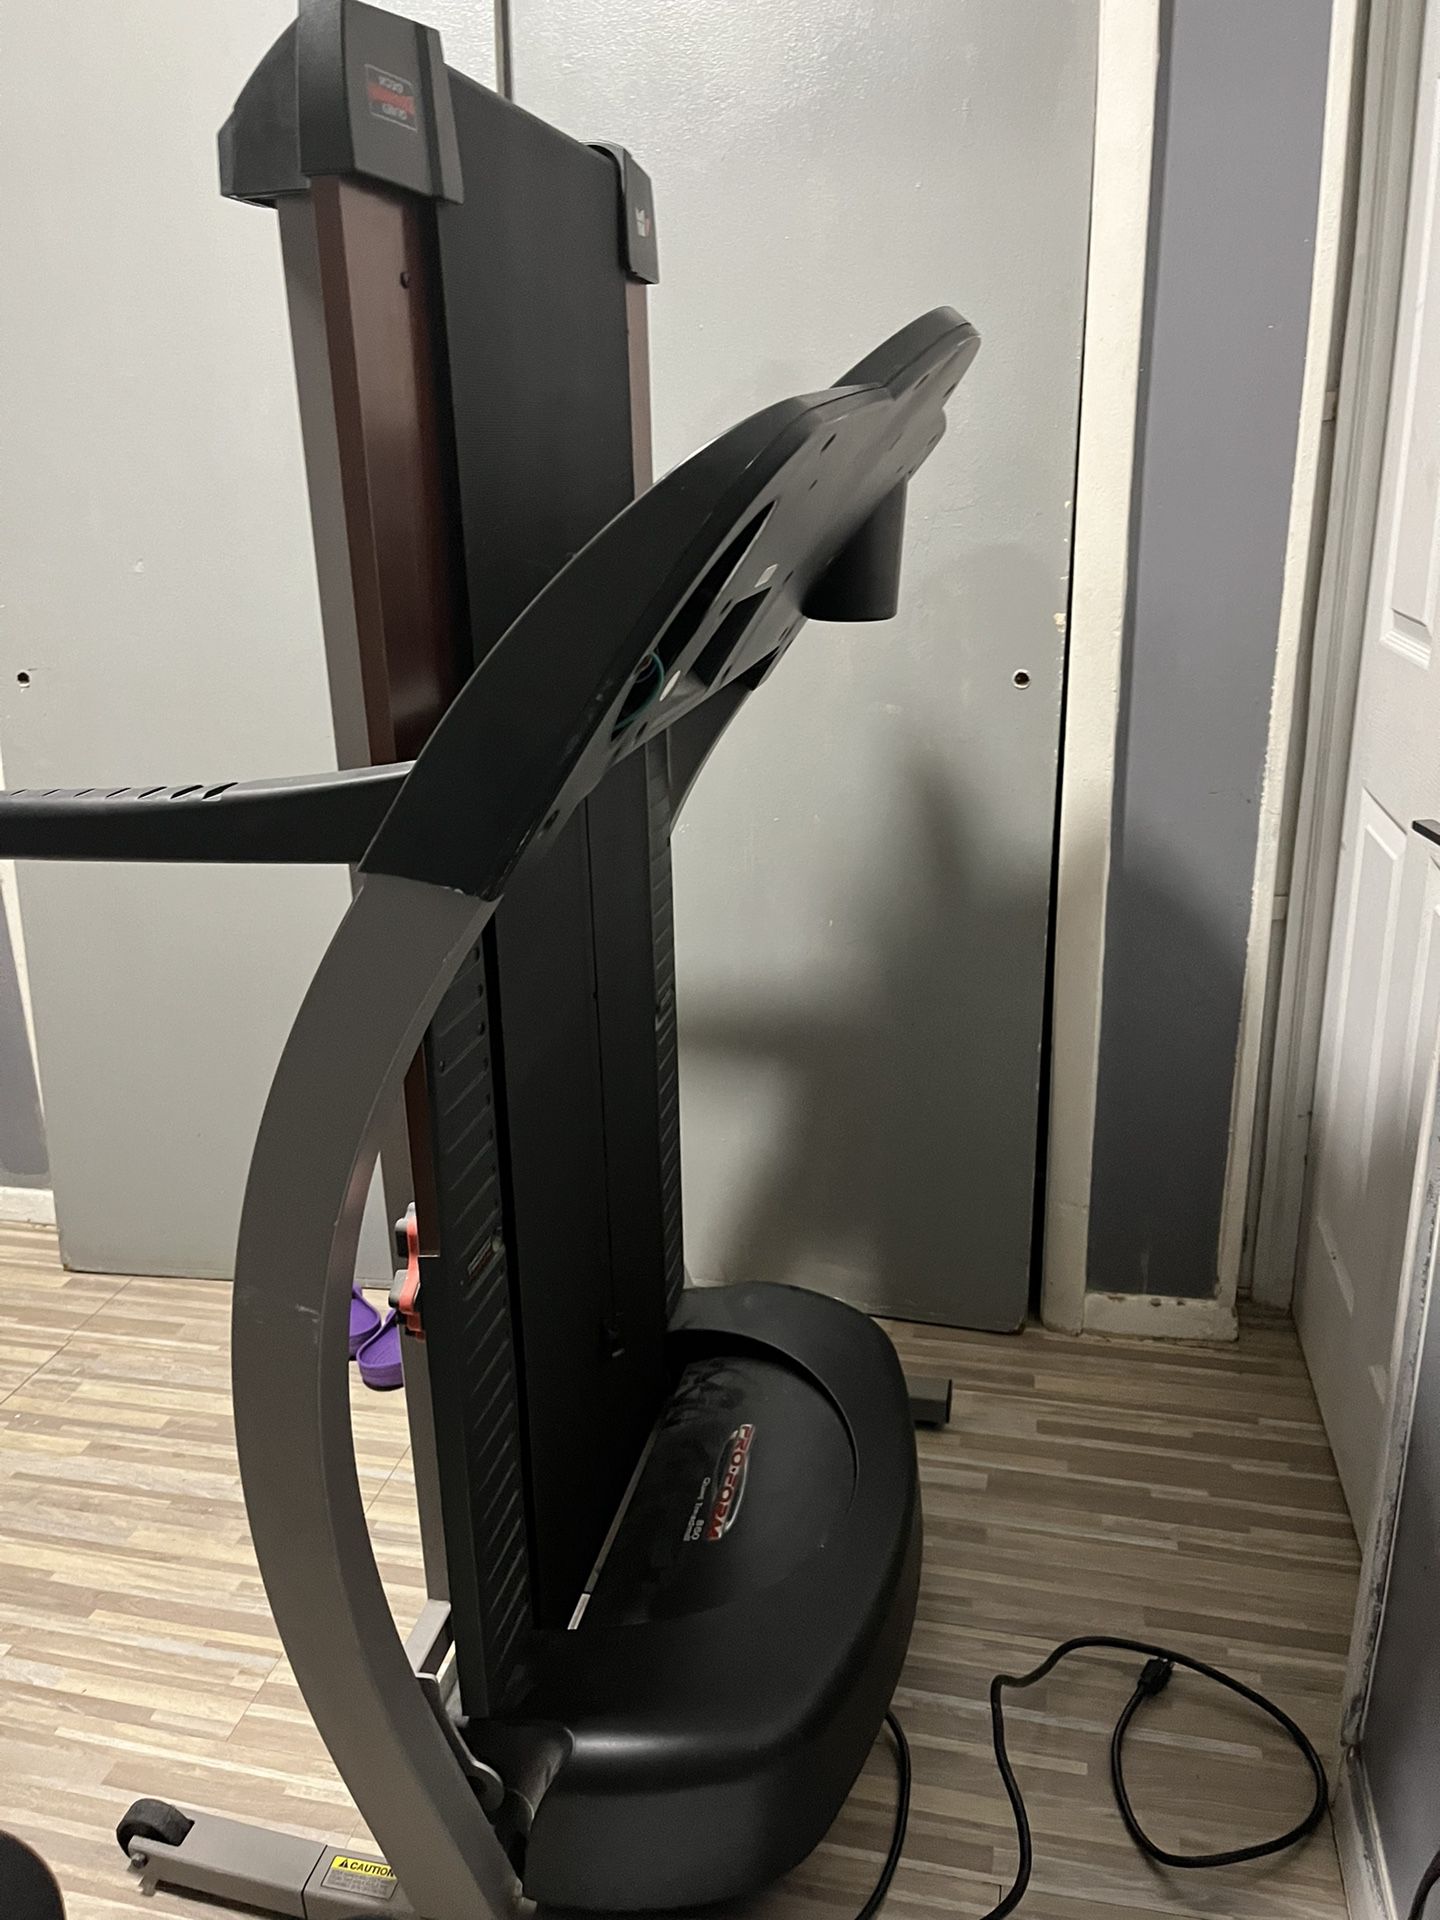 Proform 775 EKG Treadmill /Gym Equipment Space Saver